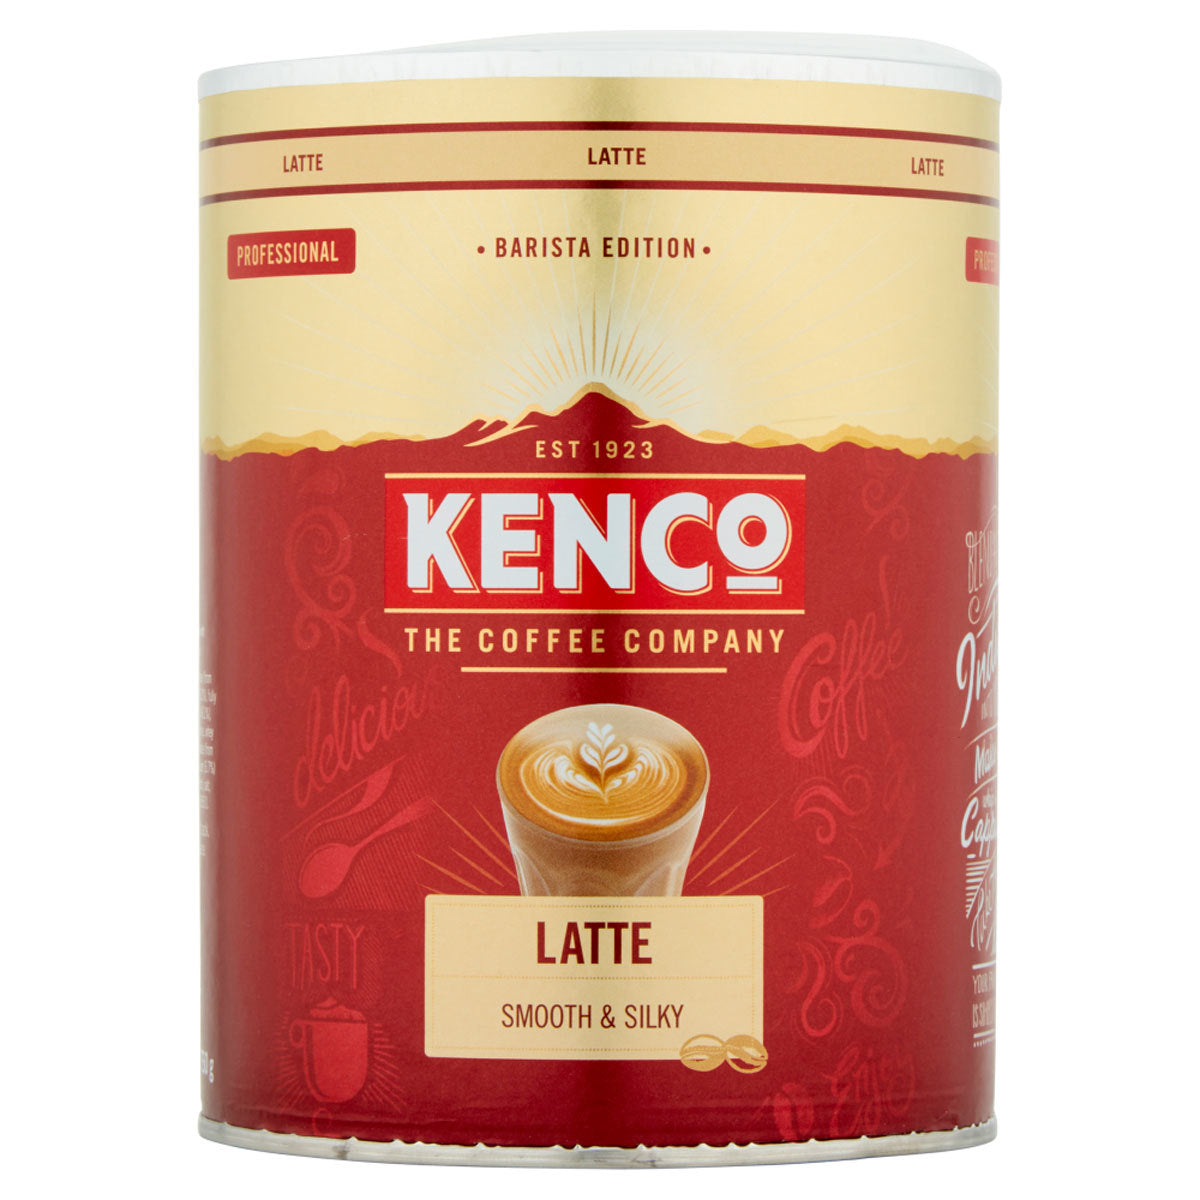 Kenco Latte, 750g Coffee Costco UK   